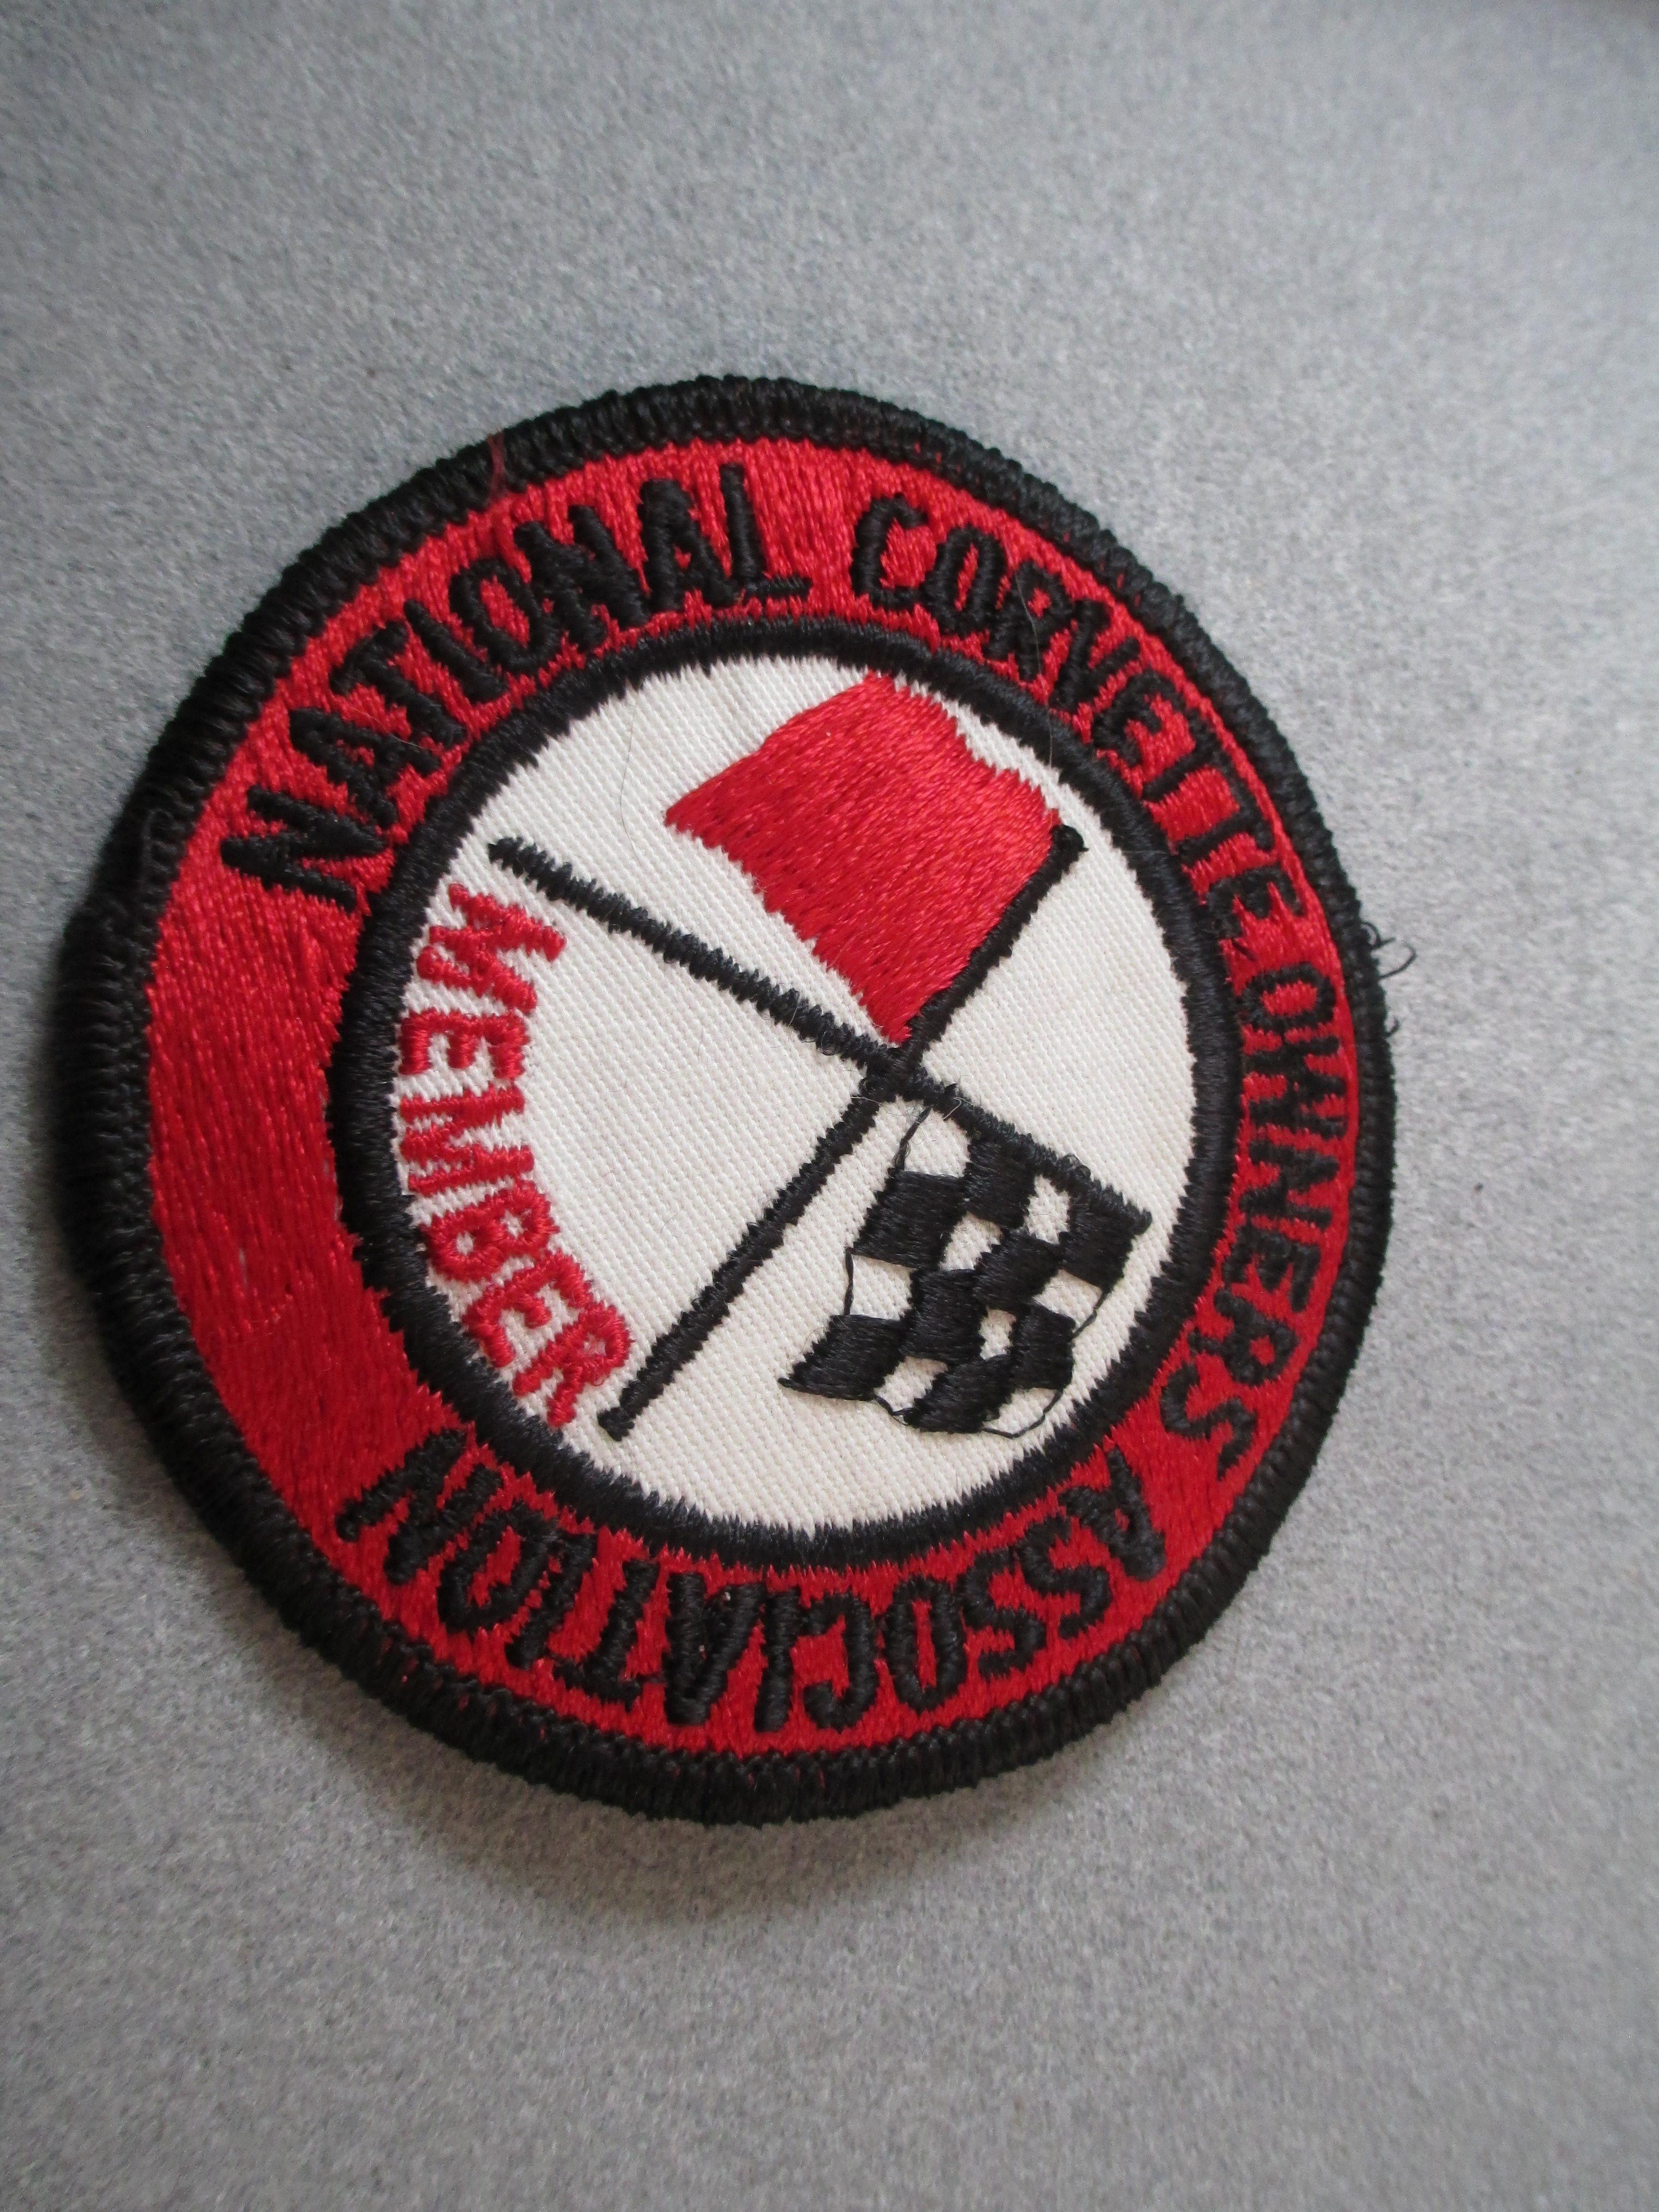 Vintage National Corvette Owners Association Patch